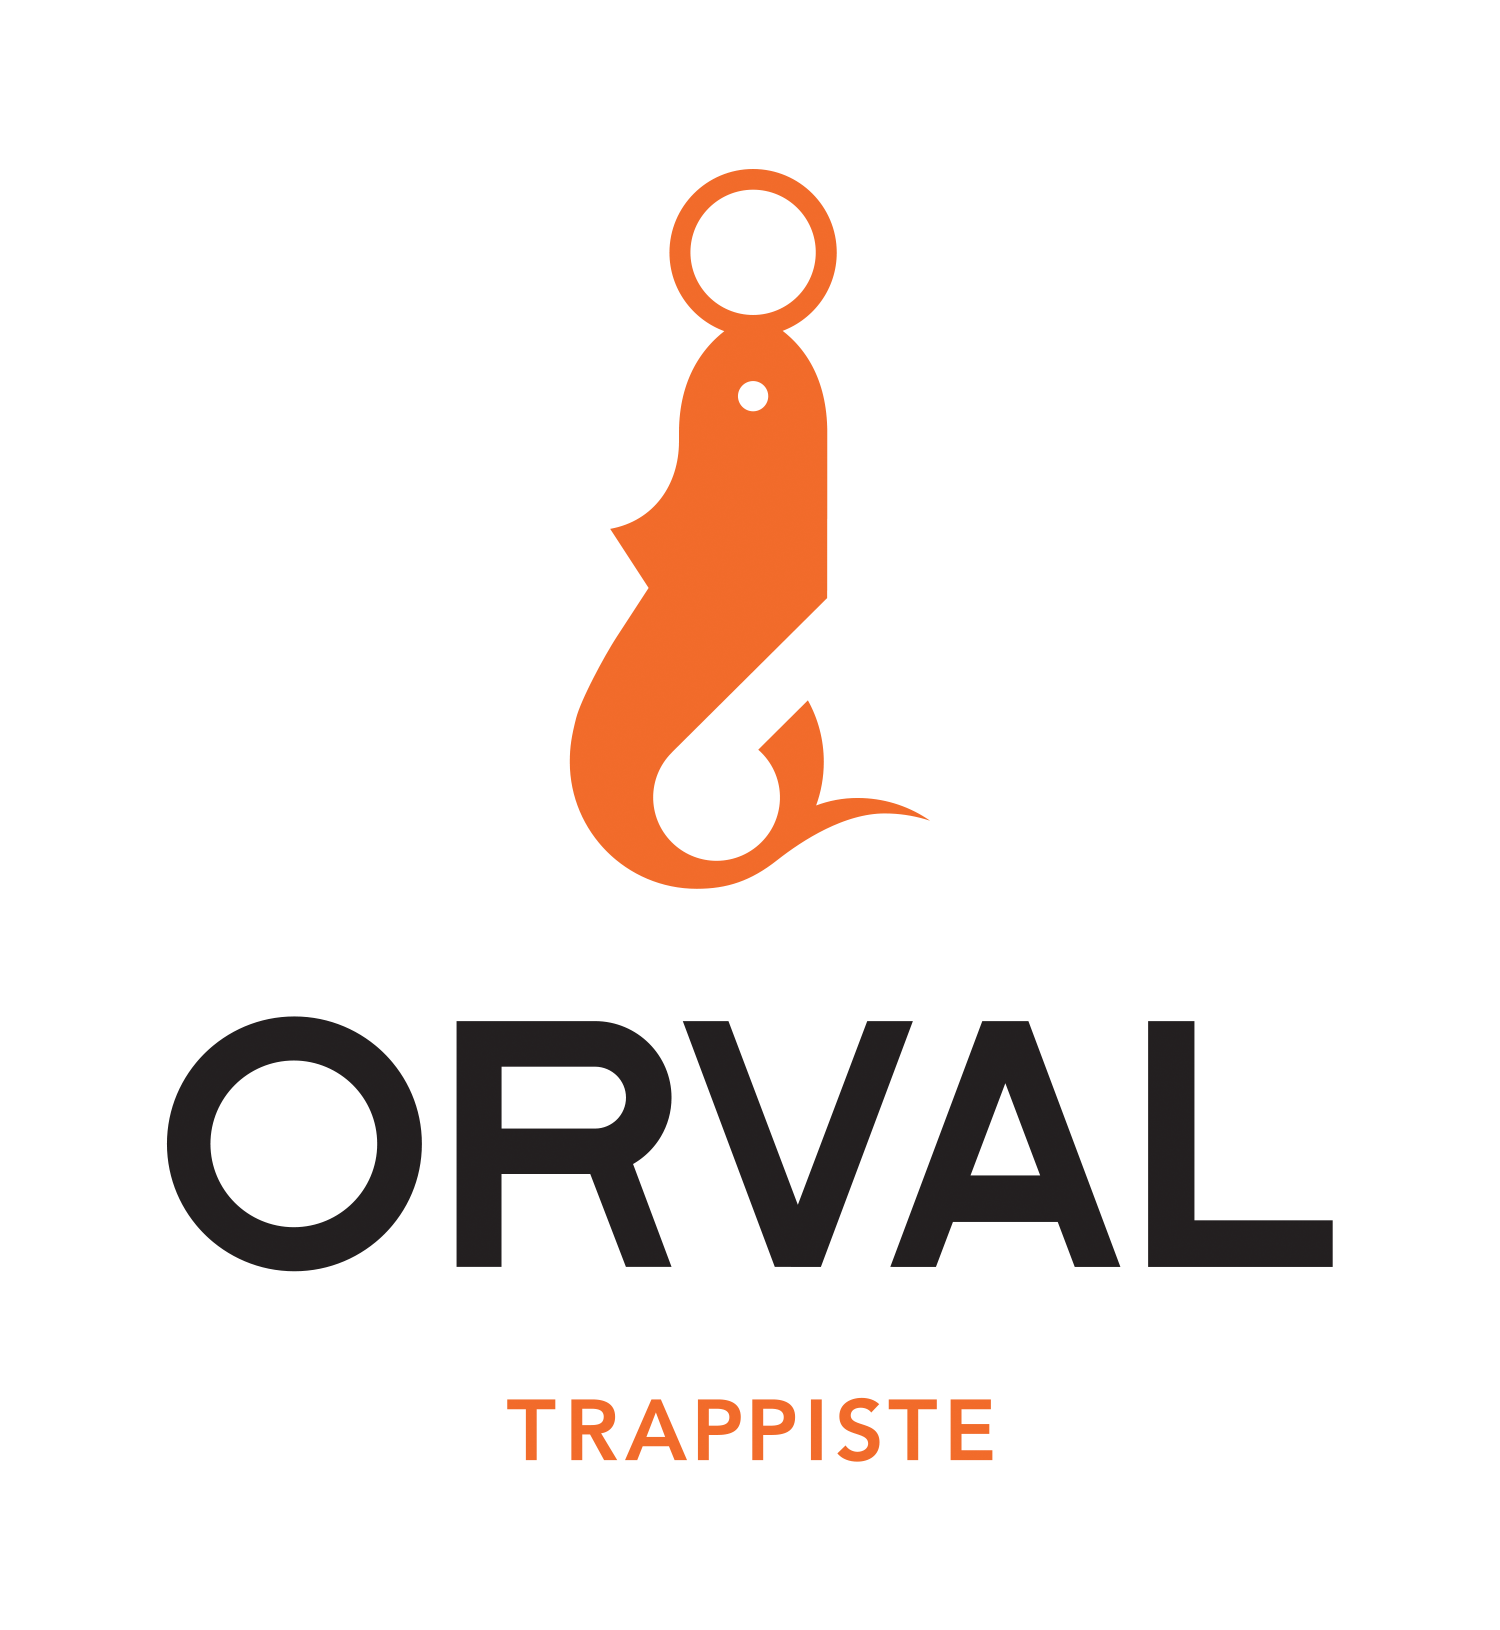 LOGO_ORVAL_TRAPPISTE_RVB